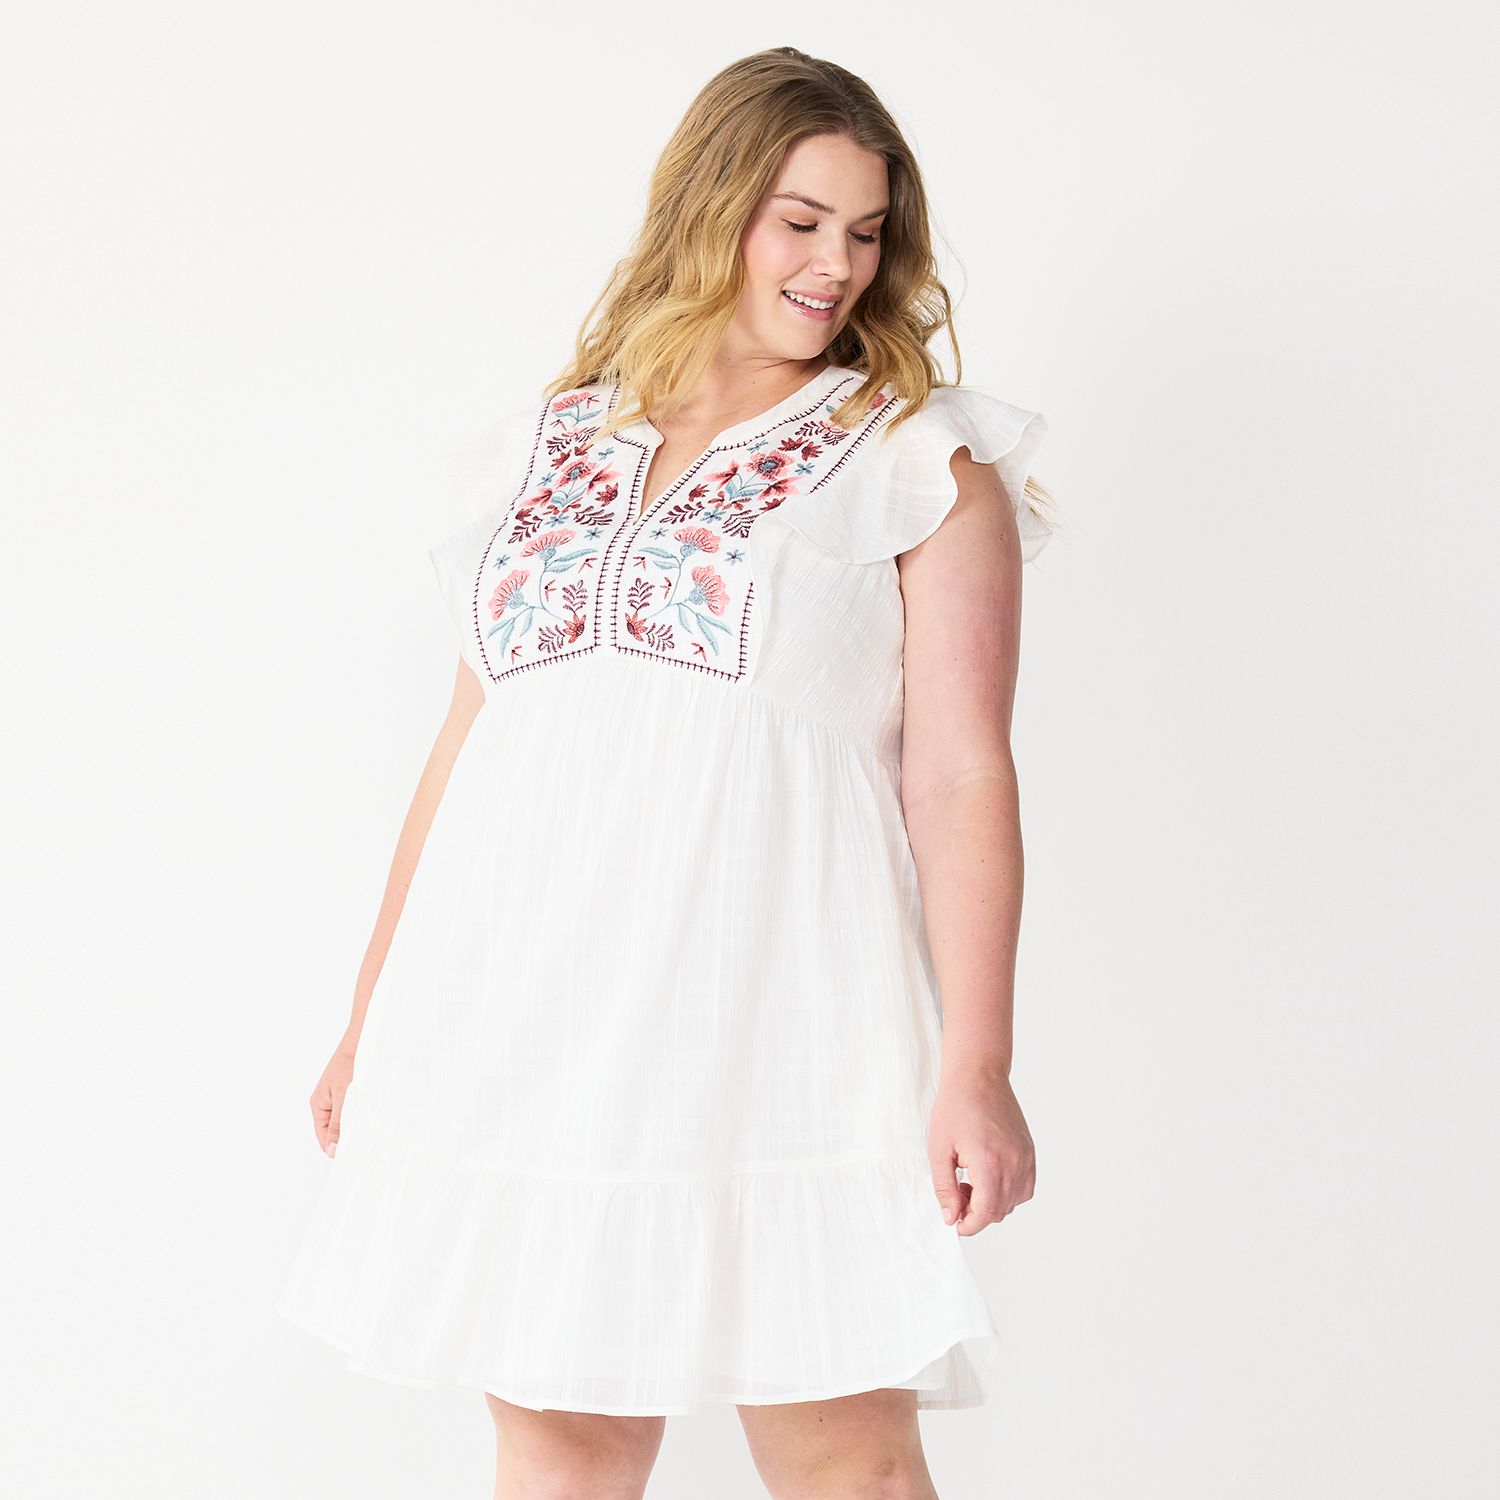 Shop Plus Size Casual Dresses for Women | Kohl's